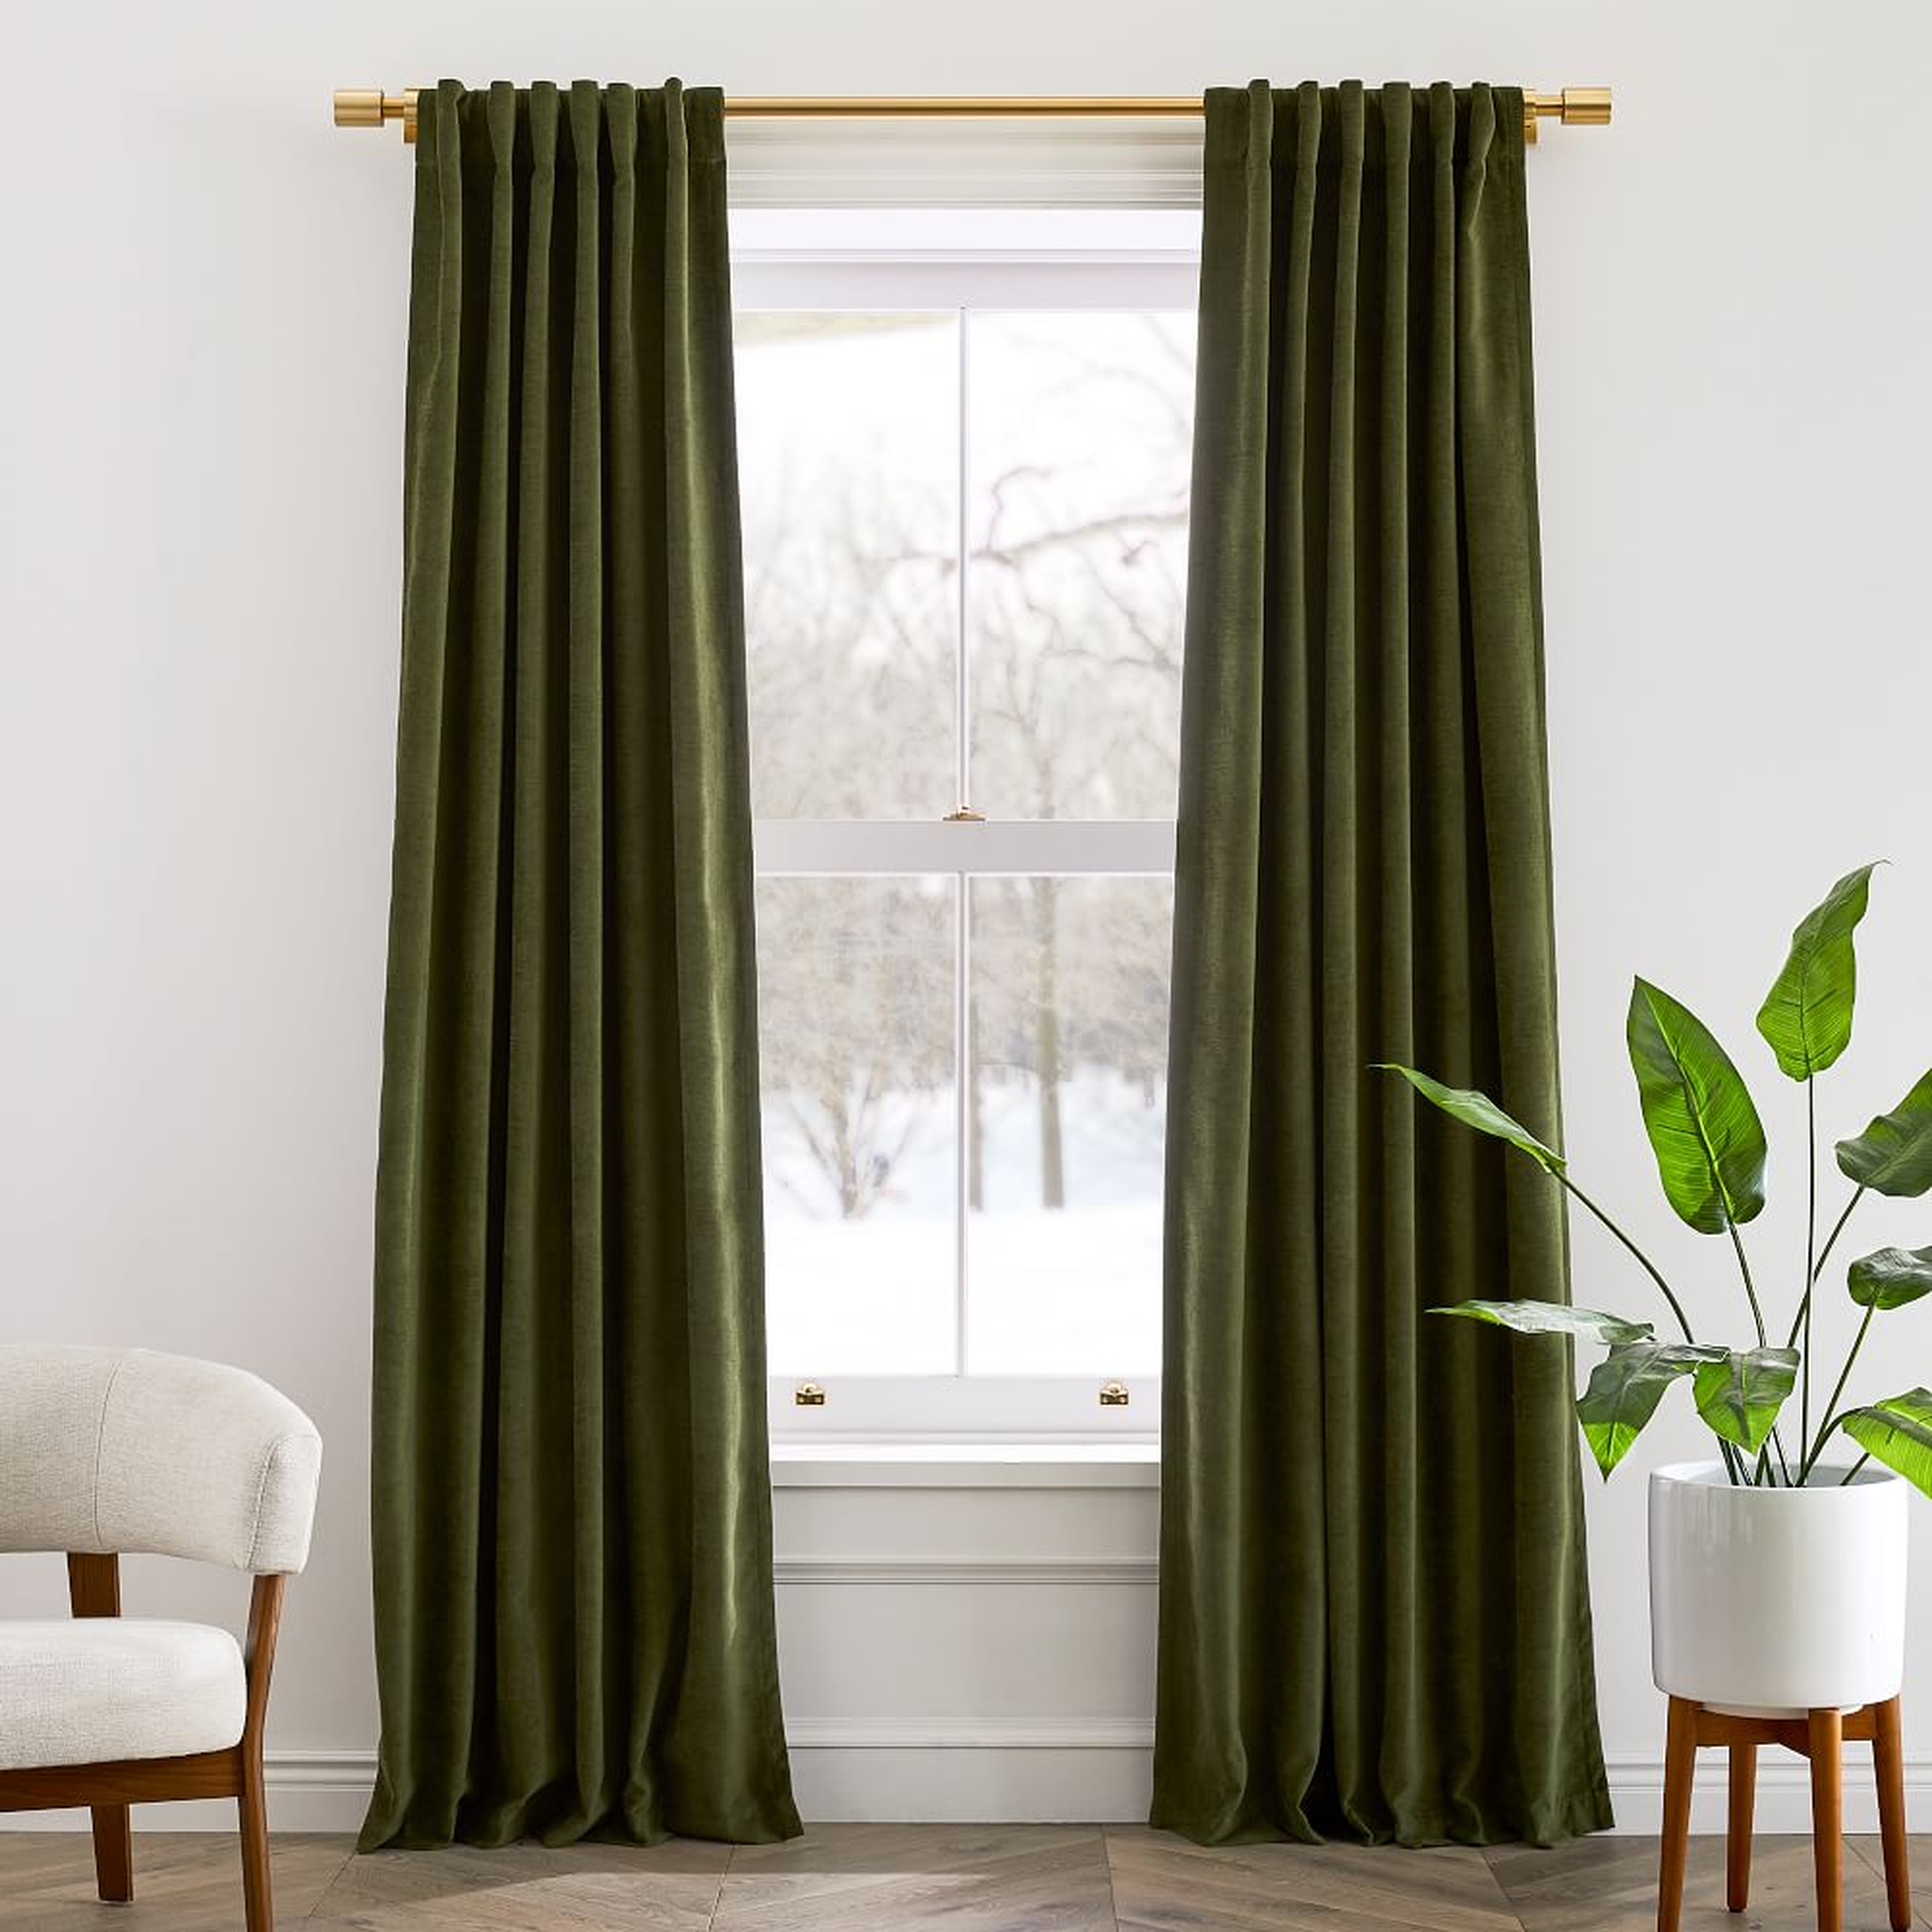 Worn Velvet Curtain with Cotton Lining, Tarragon, 48"x108", Set of 2 - West Elm